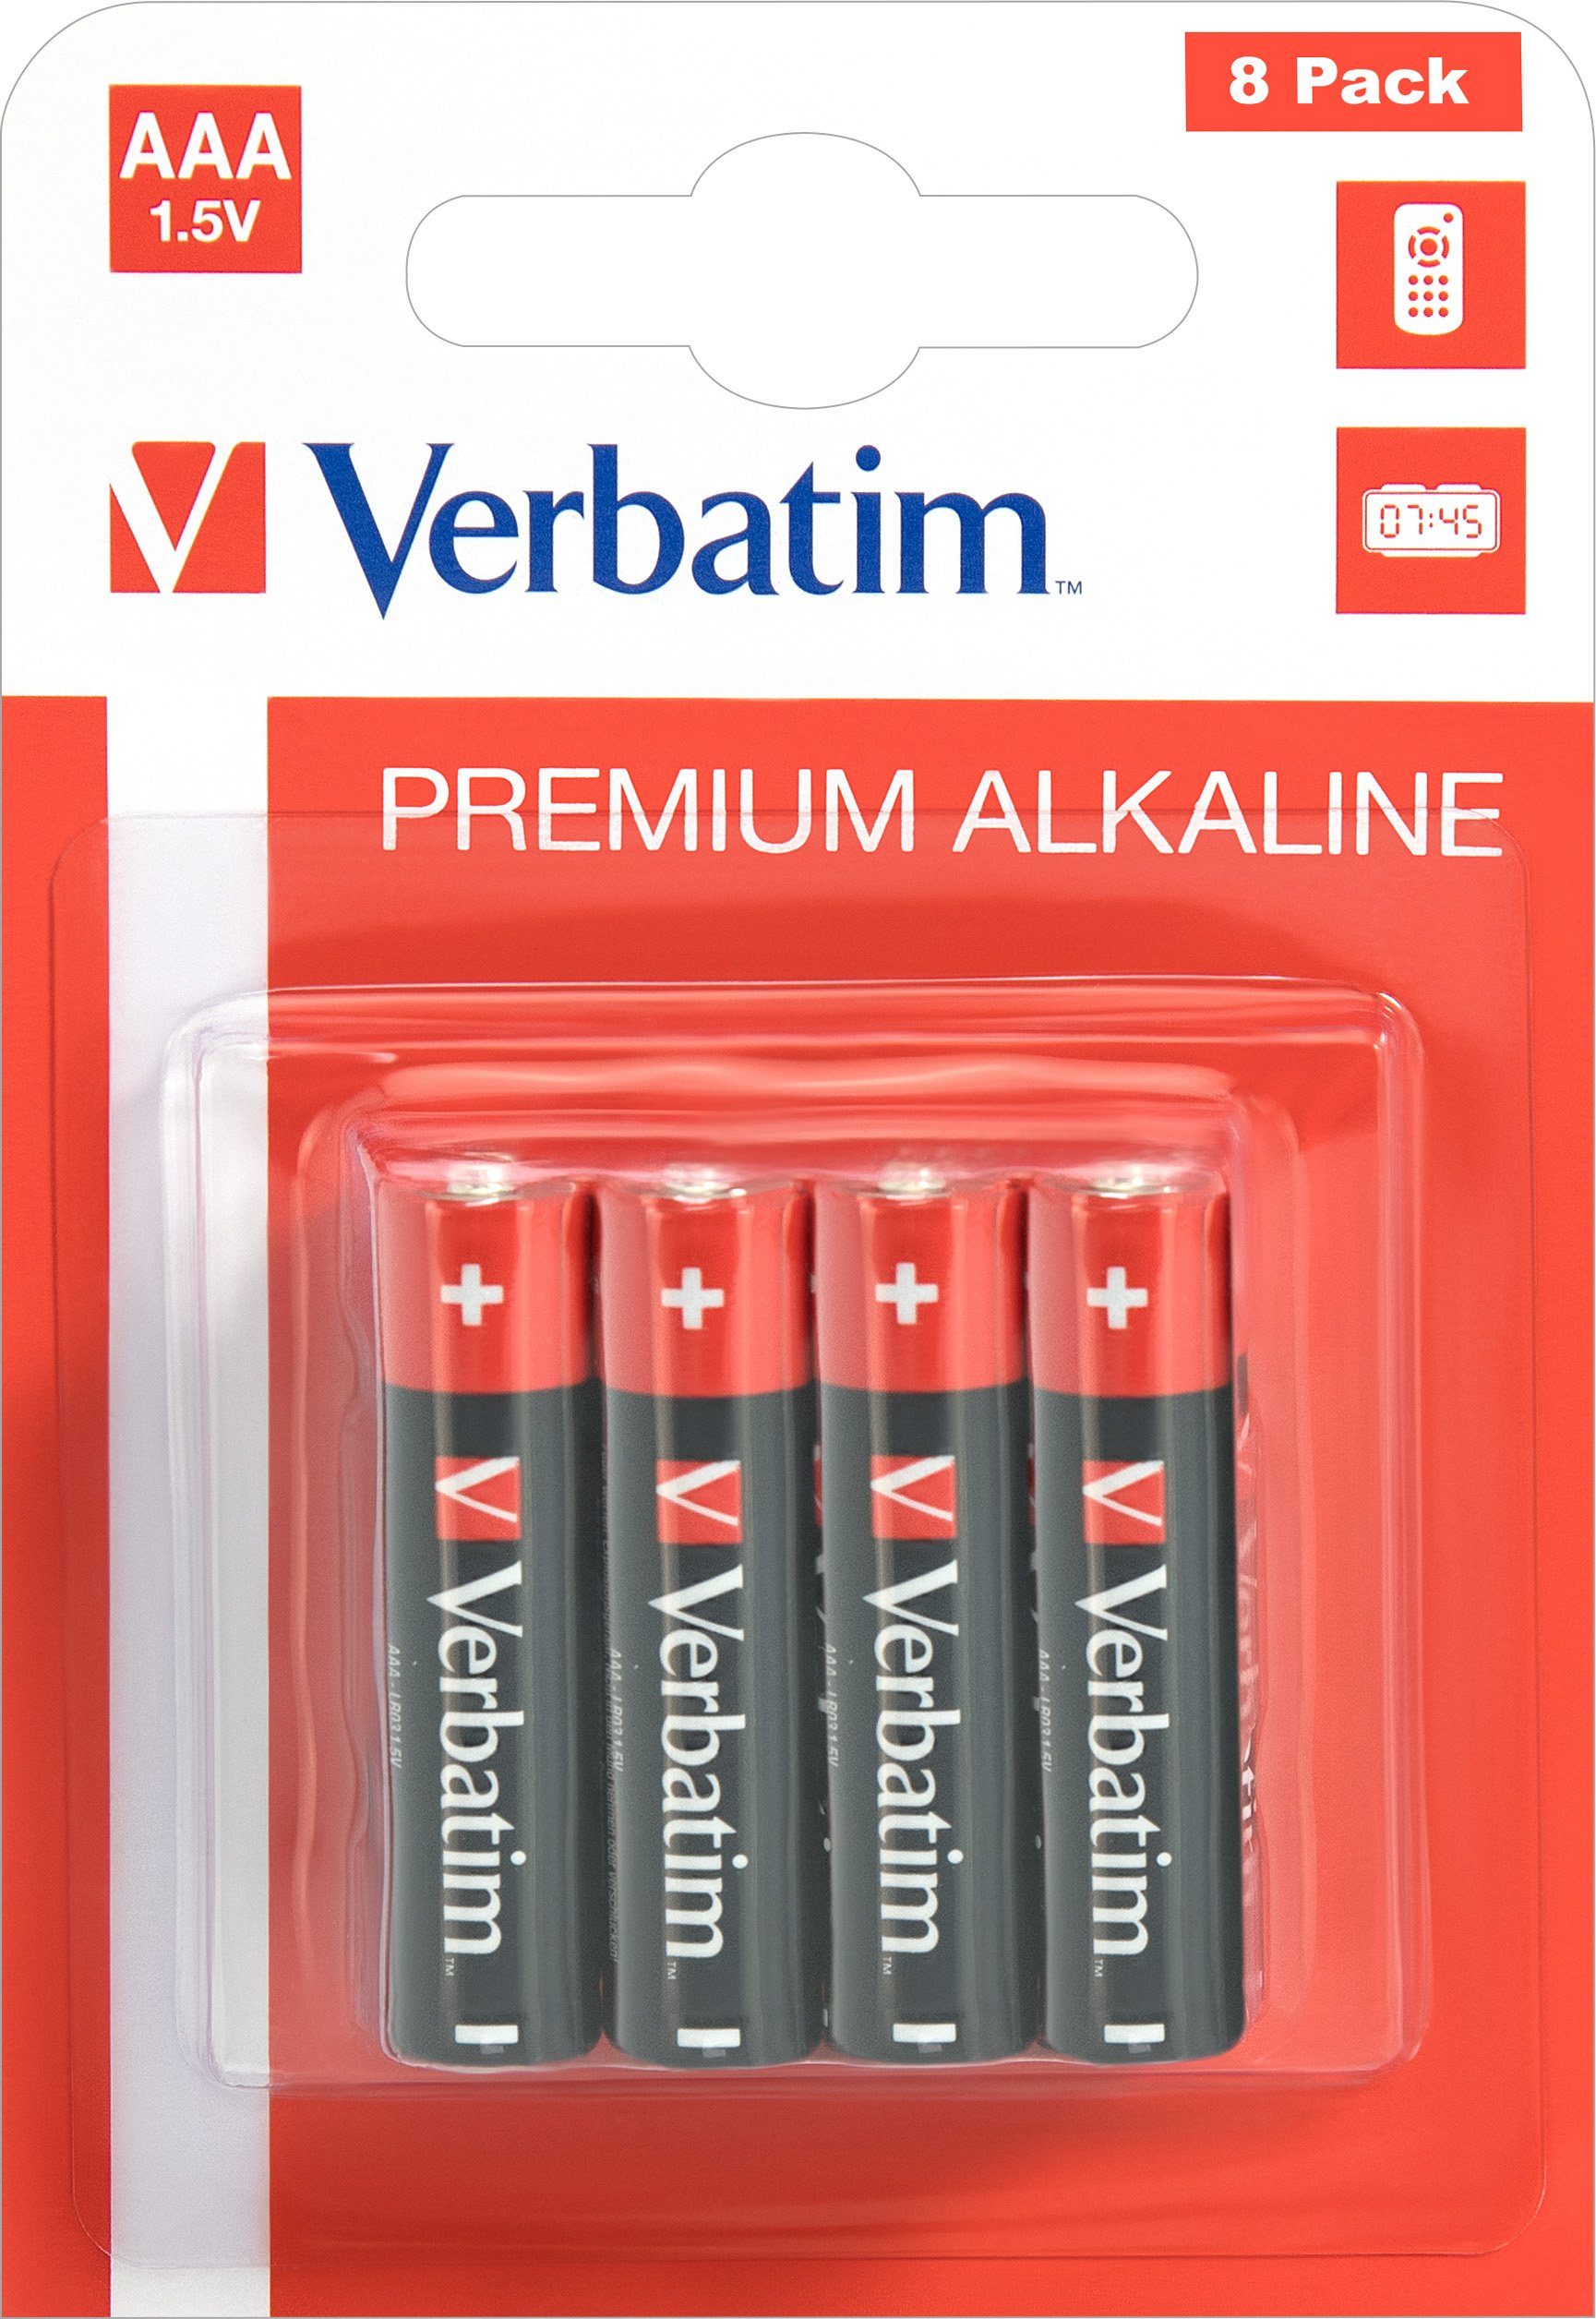 Verbatim Verbatim 1.5V Alkaline, AAA, Bl Premium, Micro, Retail Batterie Batterie LR03